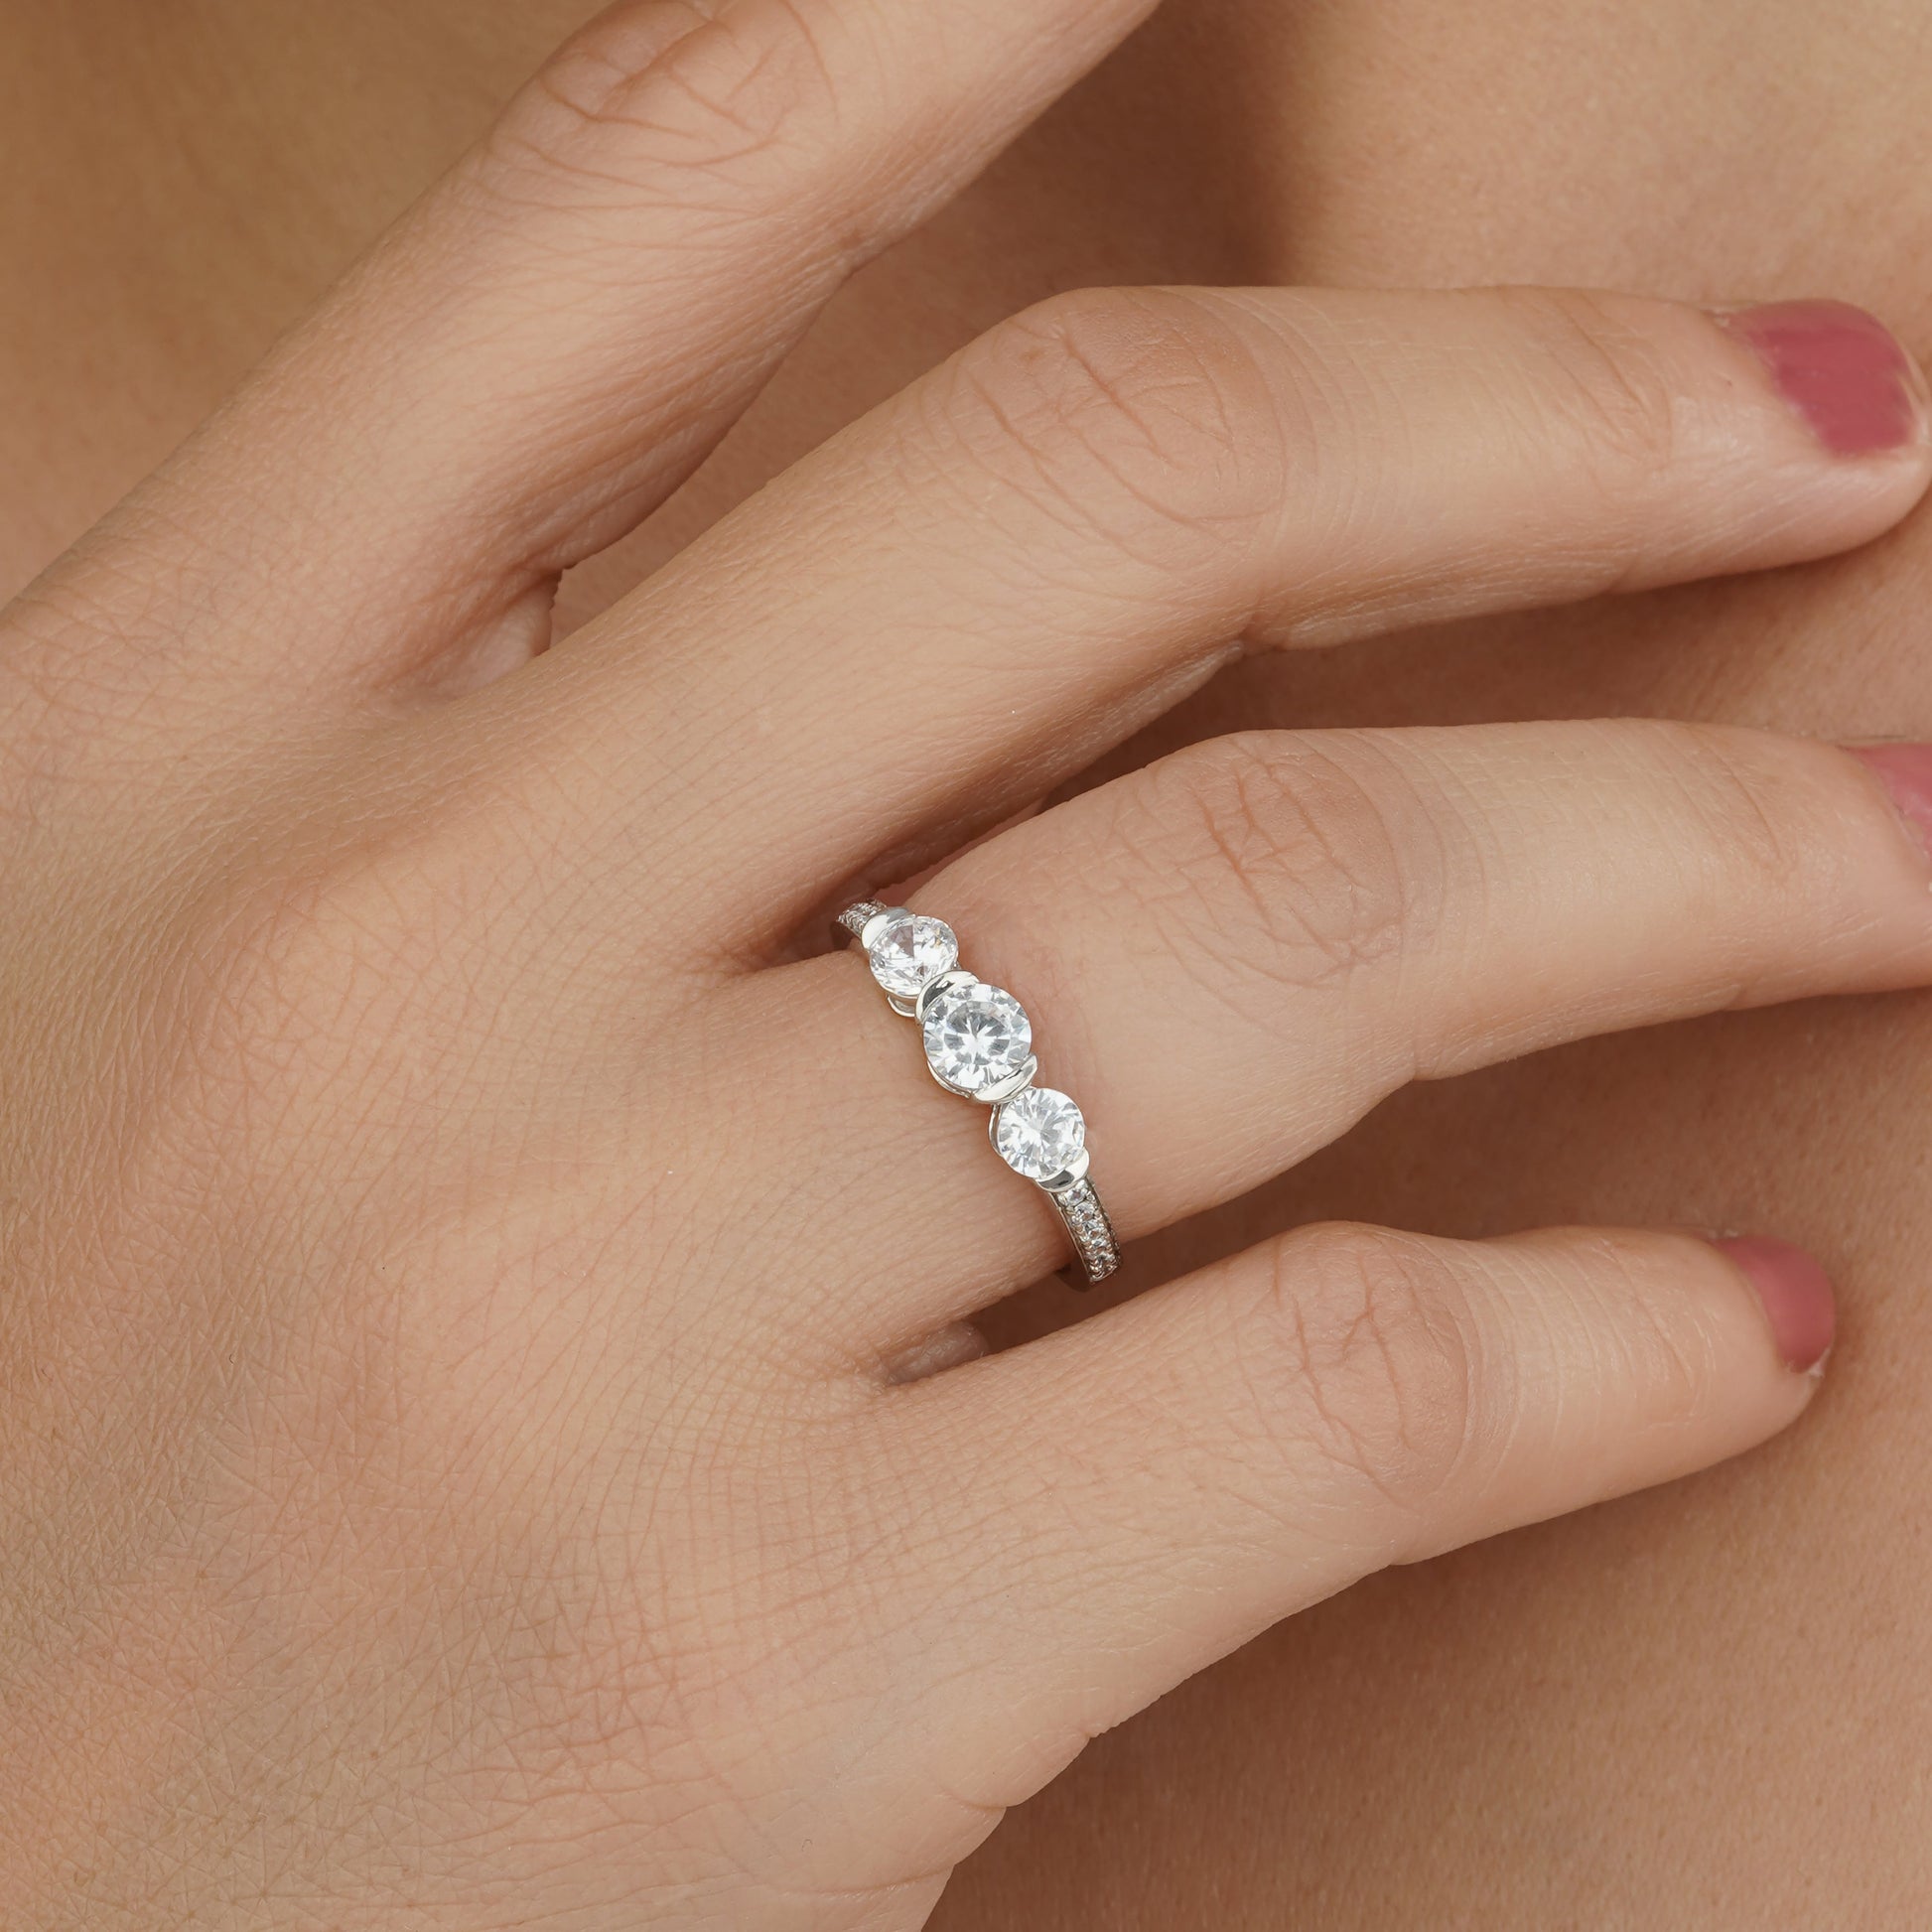 Buy Three Stone Engagement Rings Online